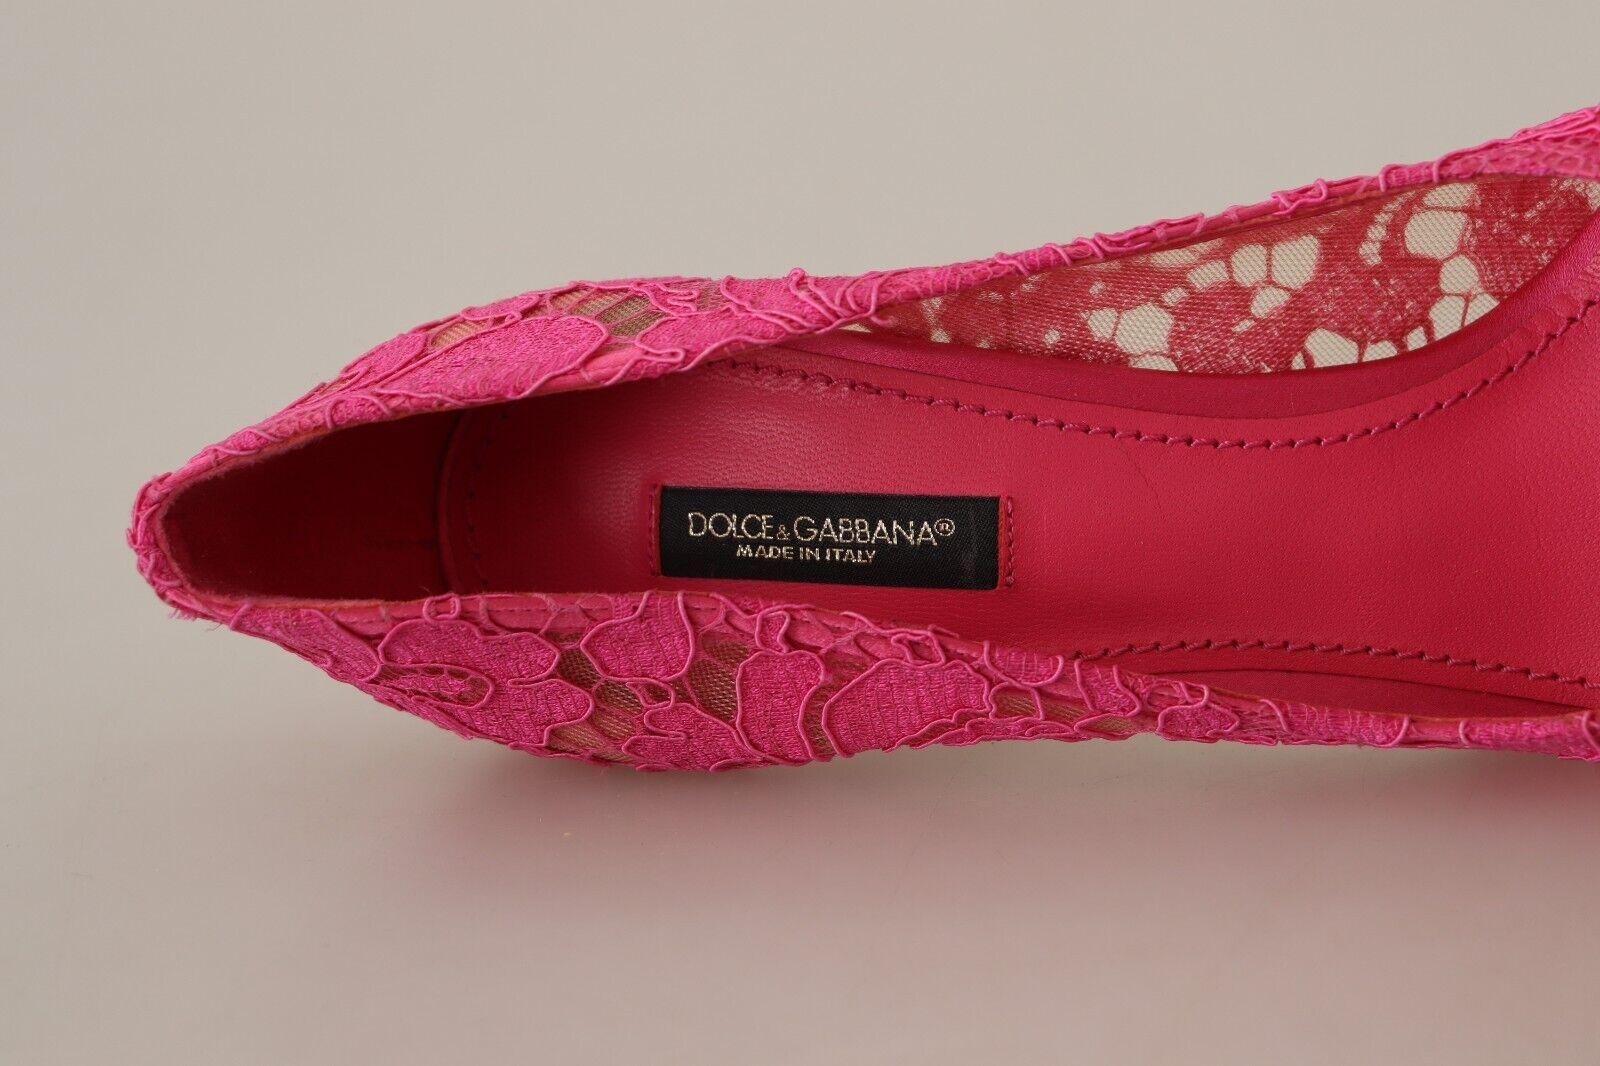 Dolce & Gabbana Pink Lace Leather Bellucci Shoes Heels Pumps Floral DG Crystals 2